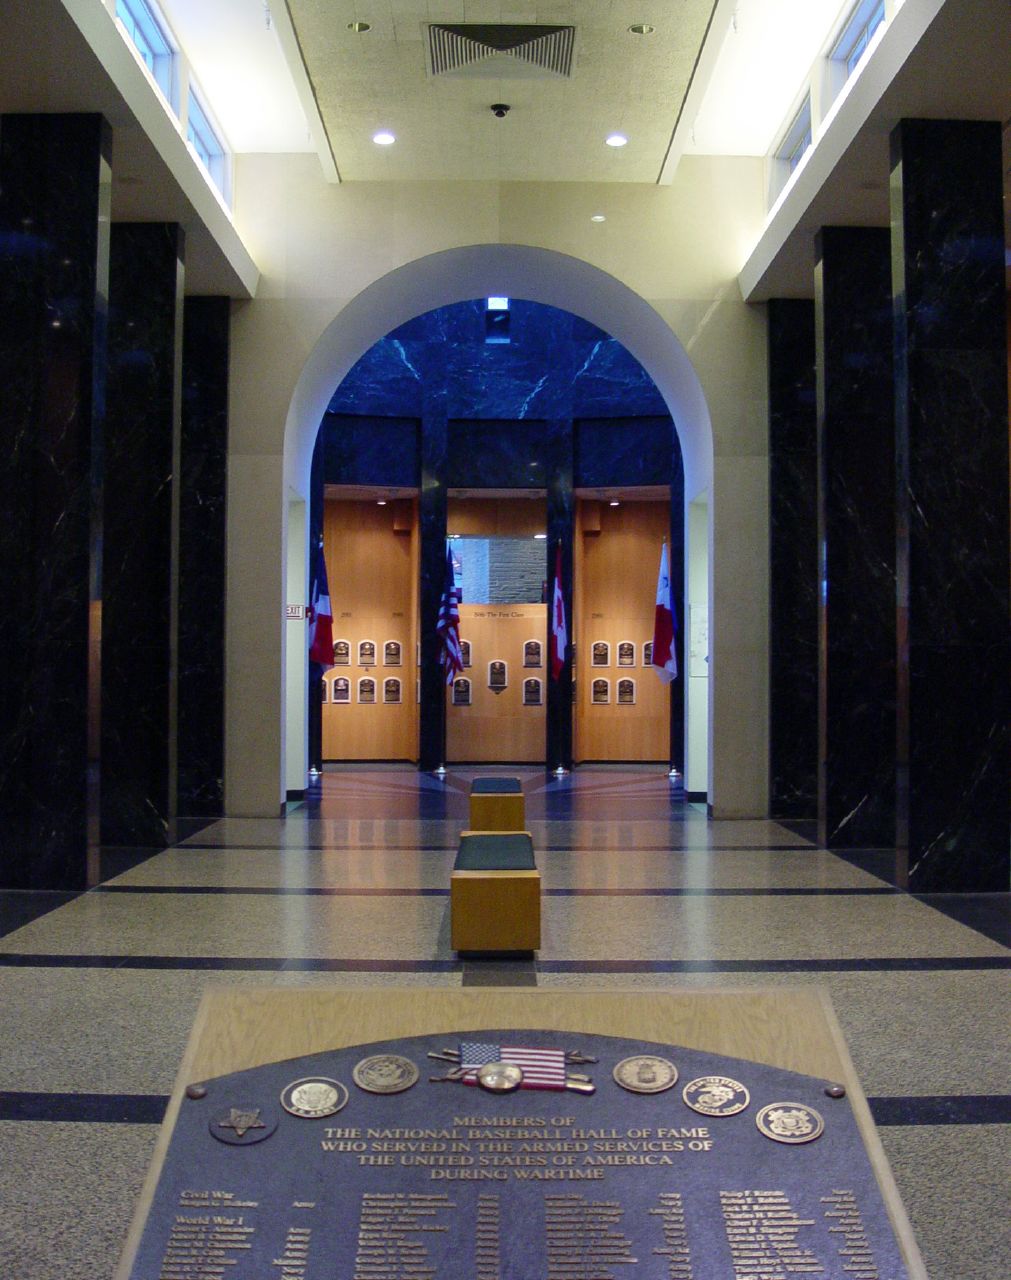 Bob Feller Museum - Wikipedia